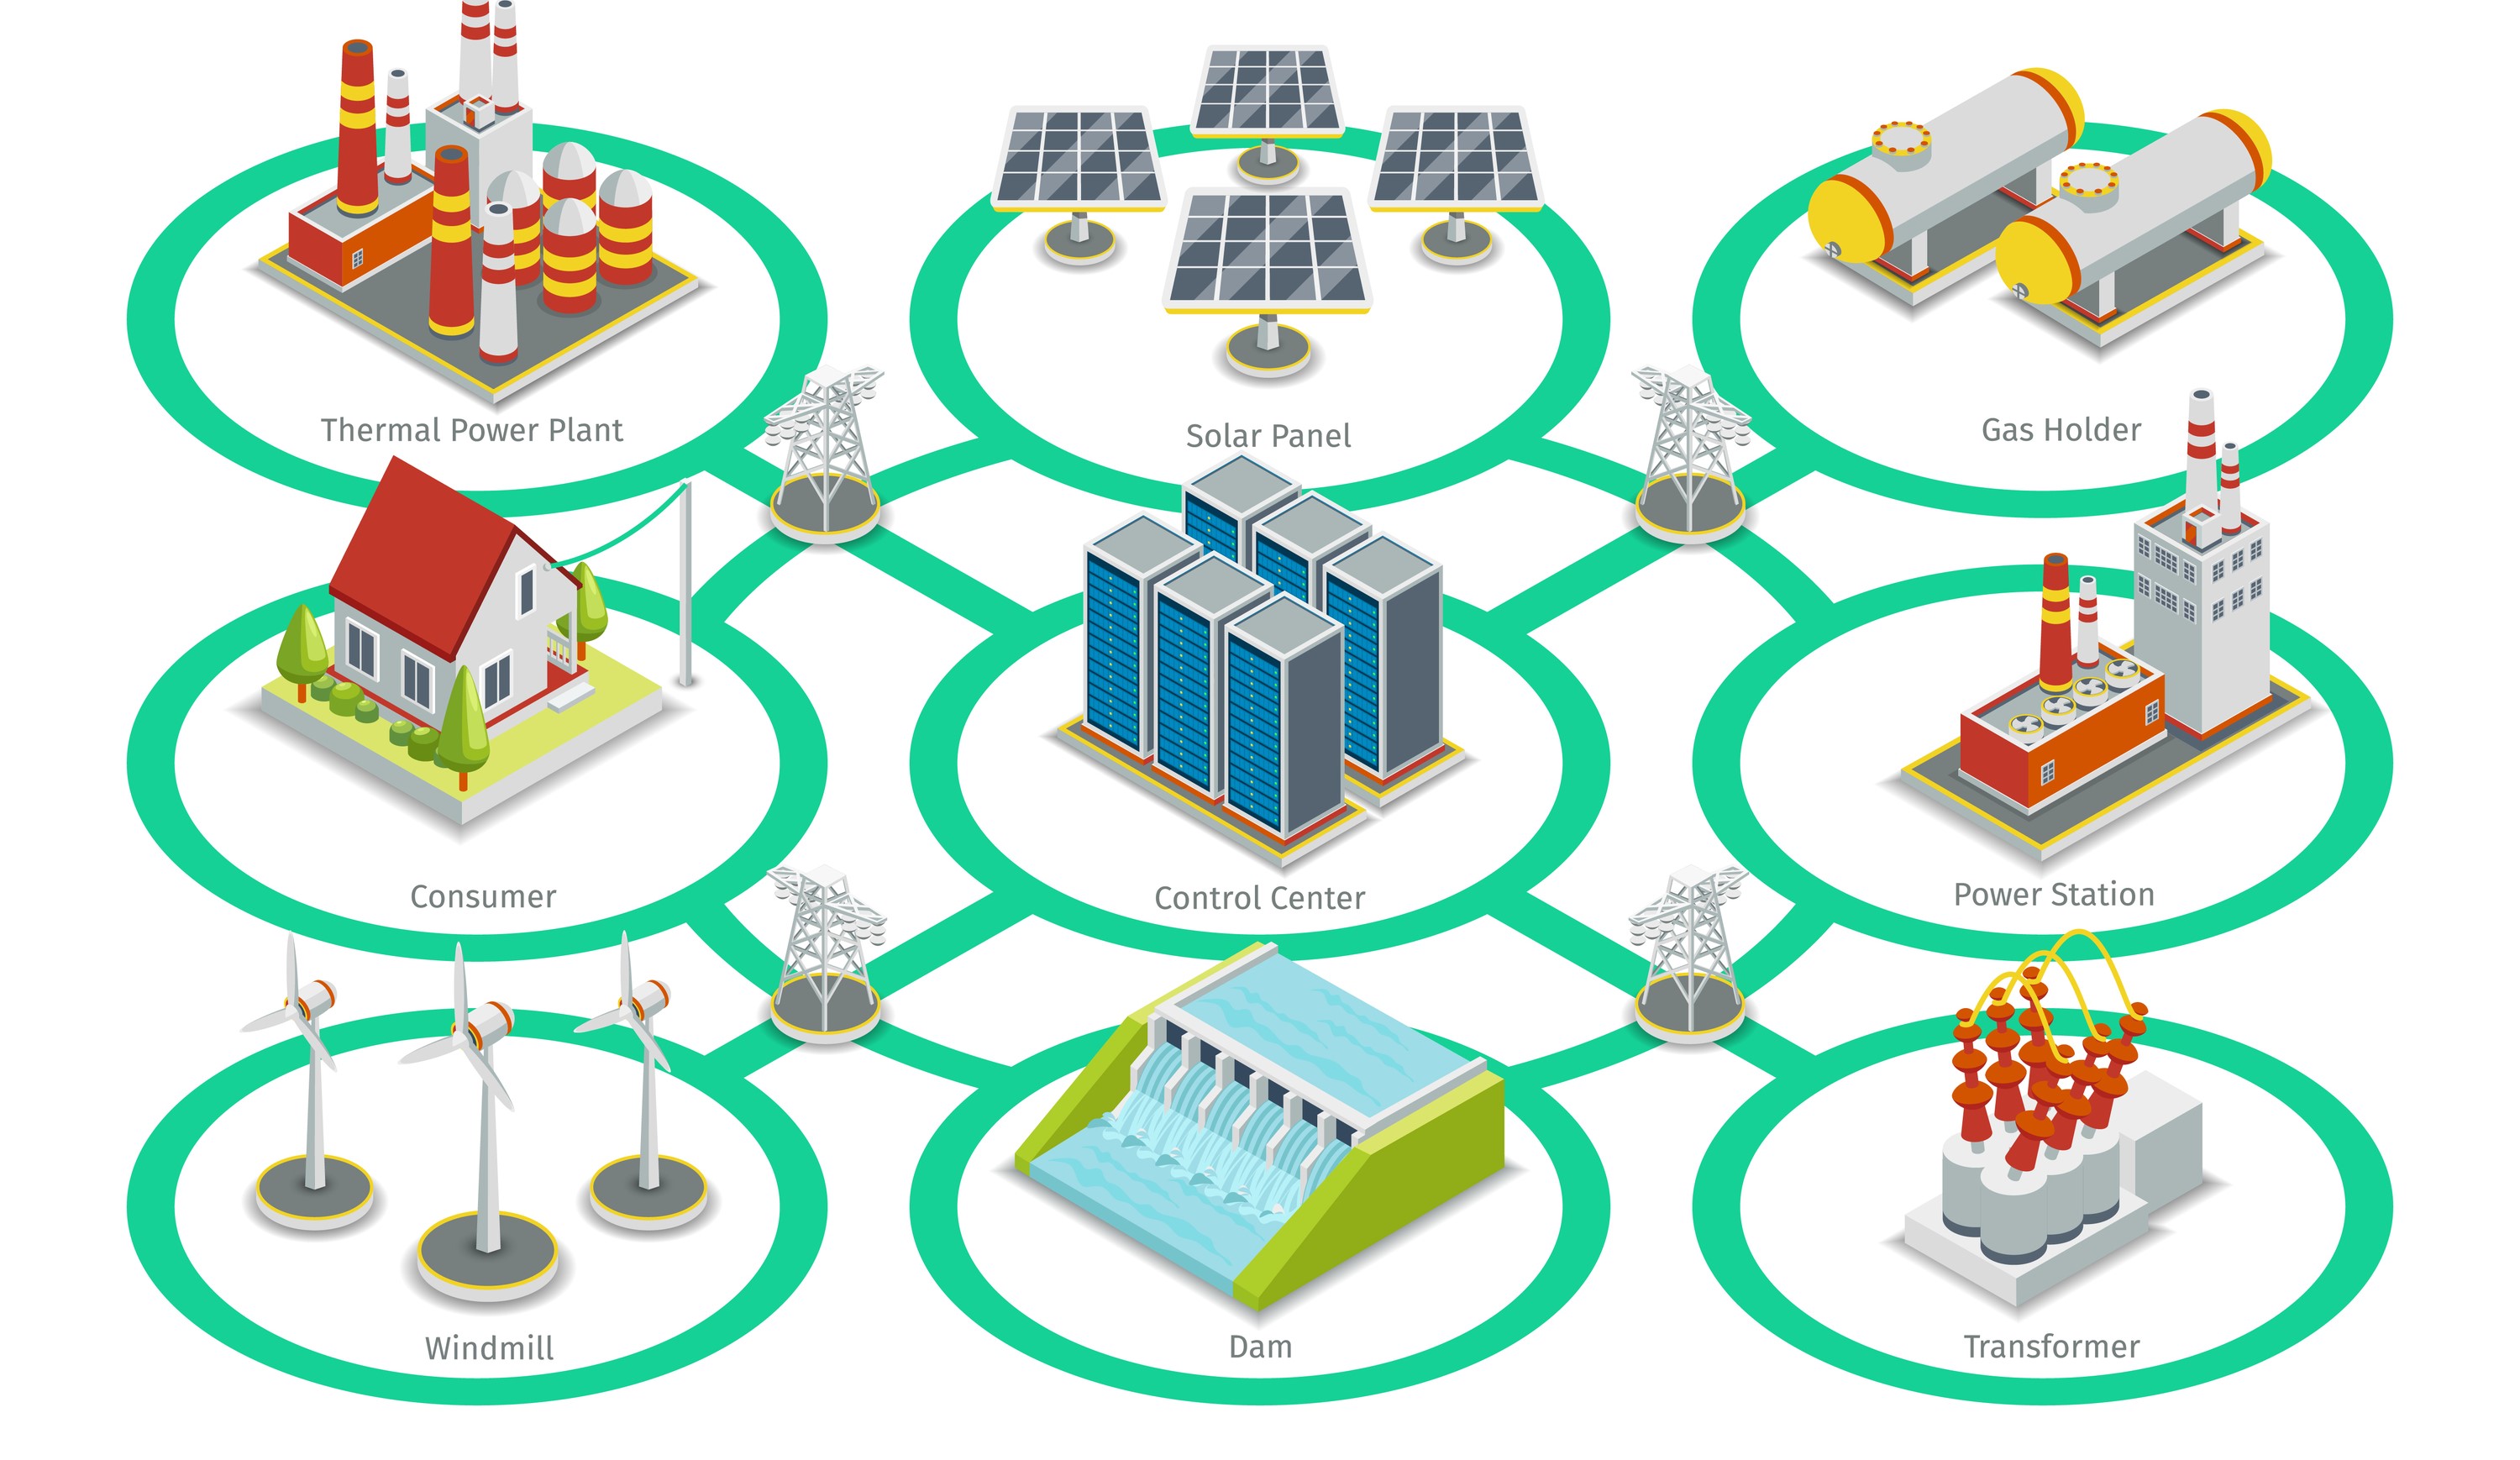 IV. Key Components of Grid Modernization